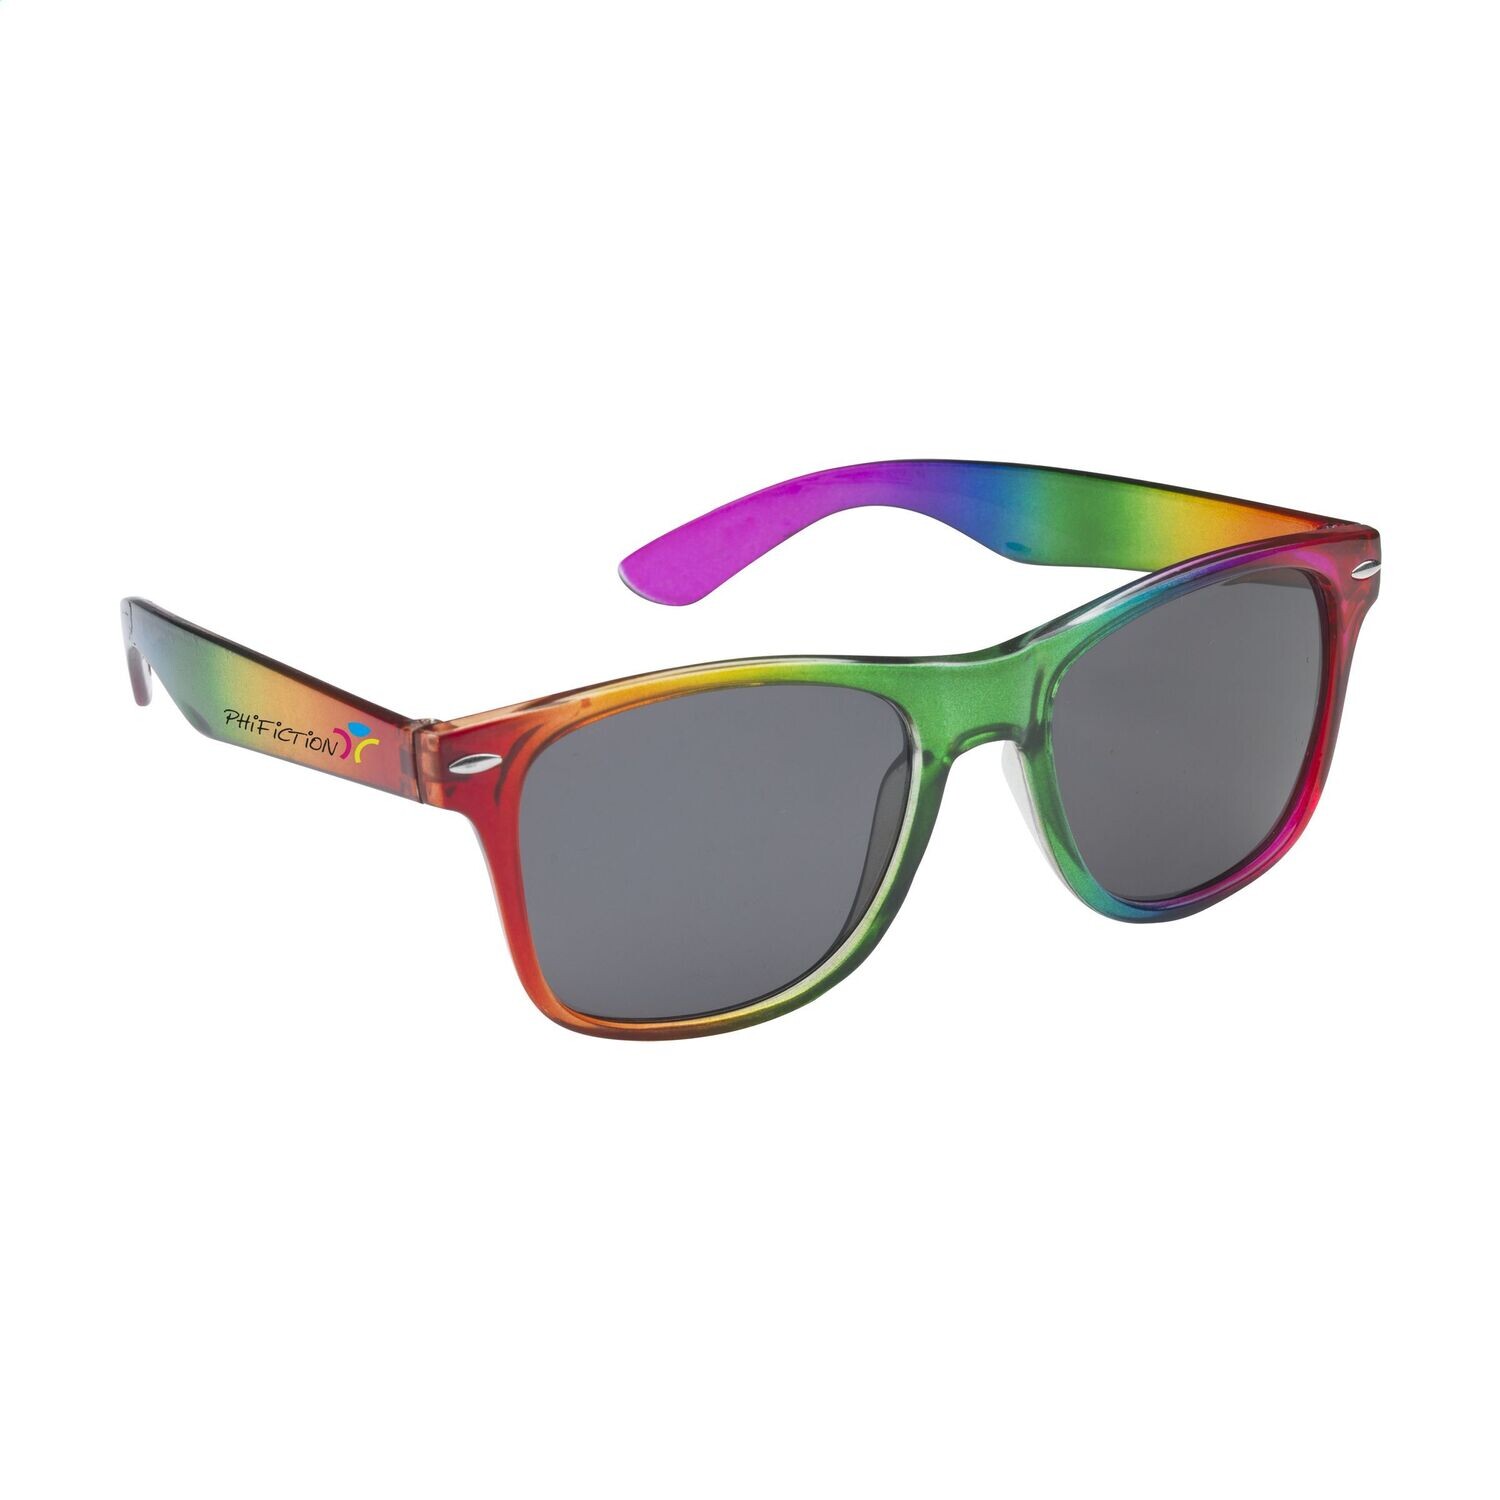 Rainbow solbriller